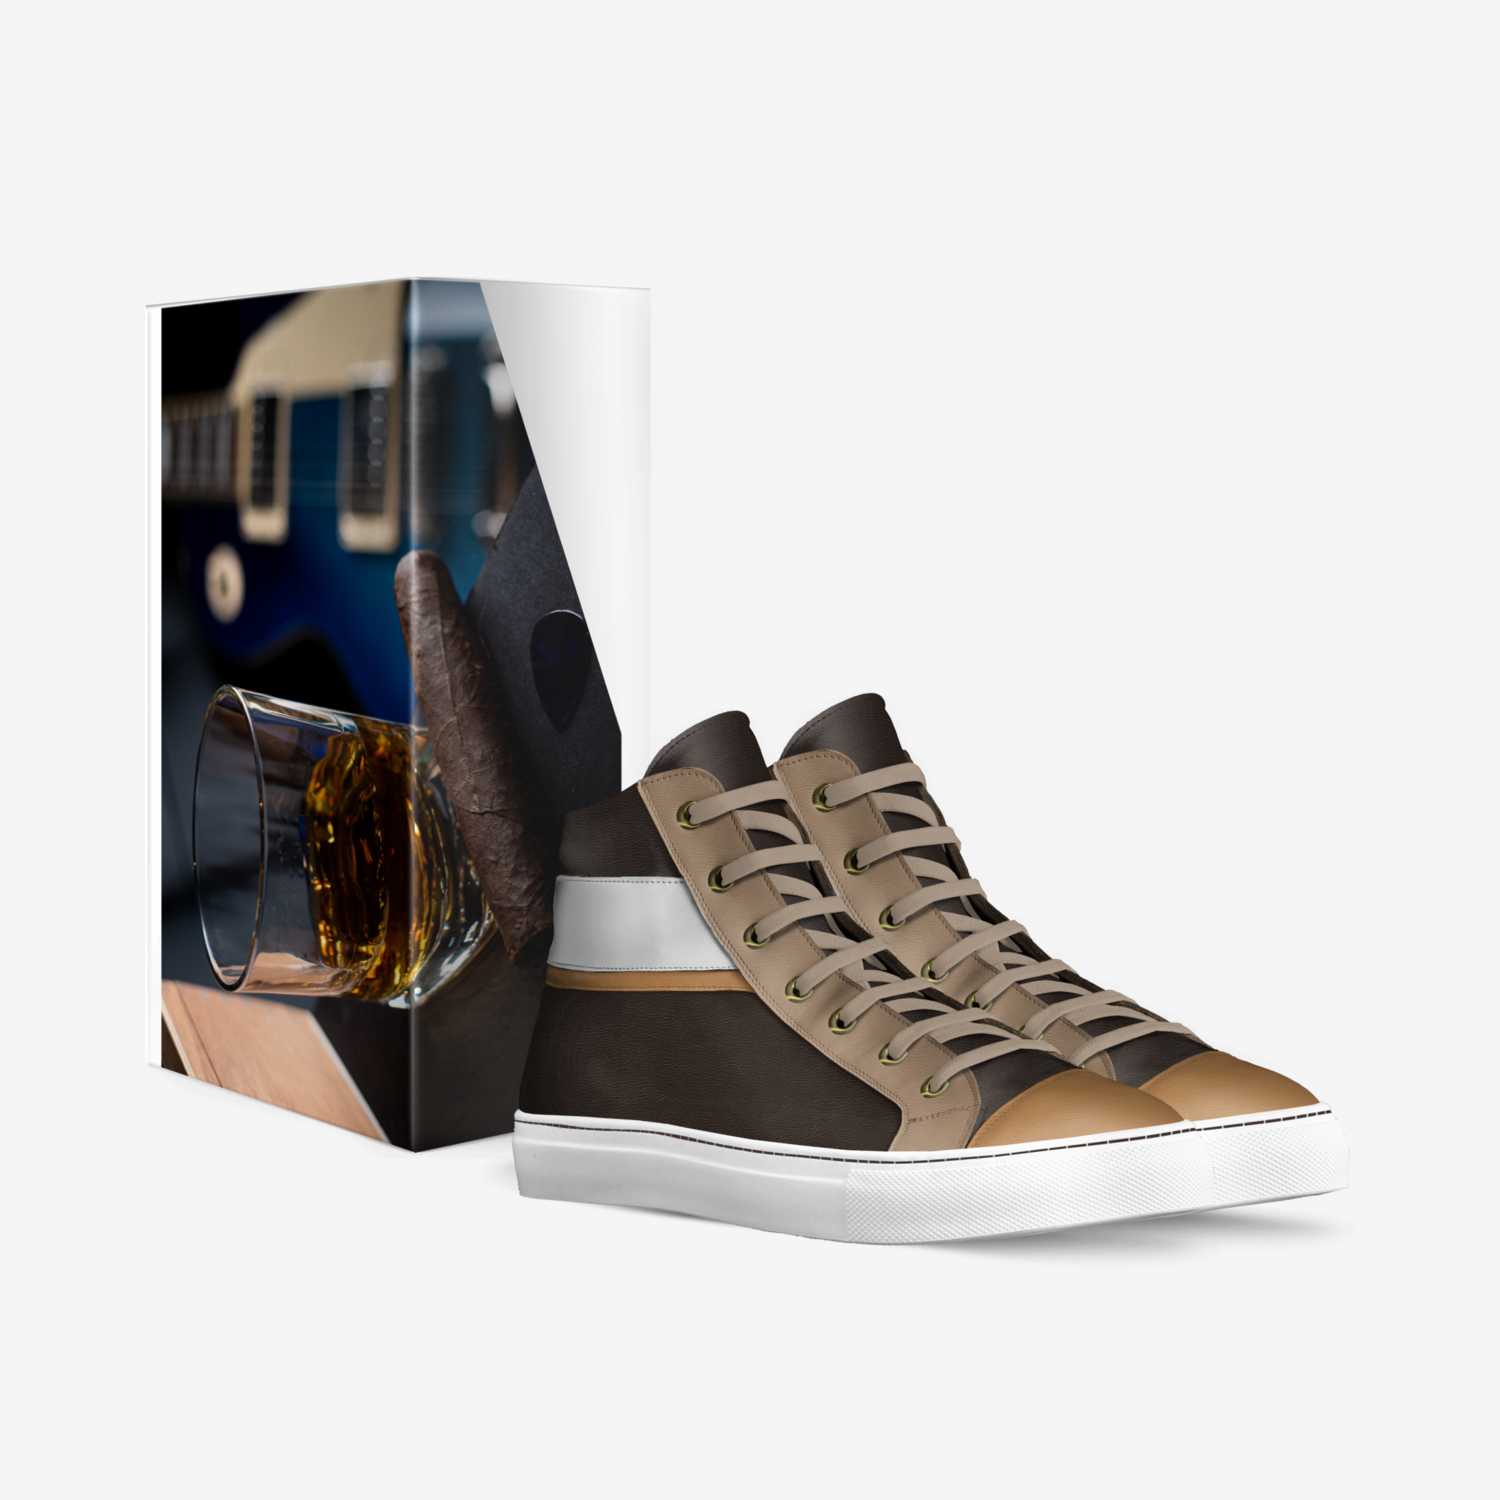 XXXVIII-Spec 1485 custom made in Italy shoes by Gary Fields | Box view